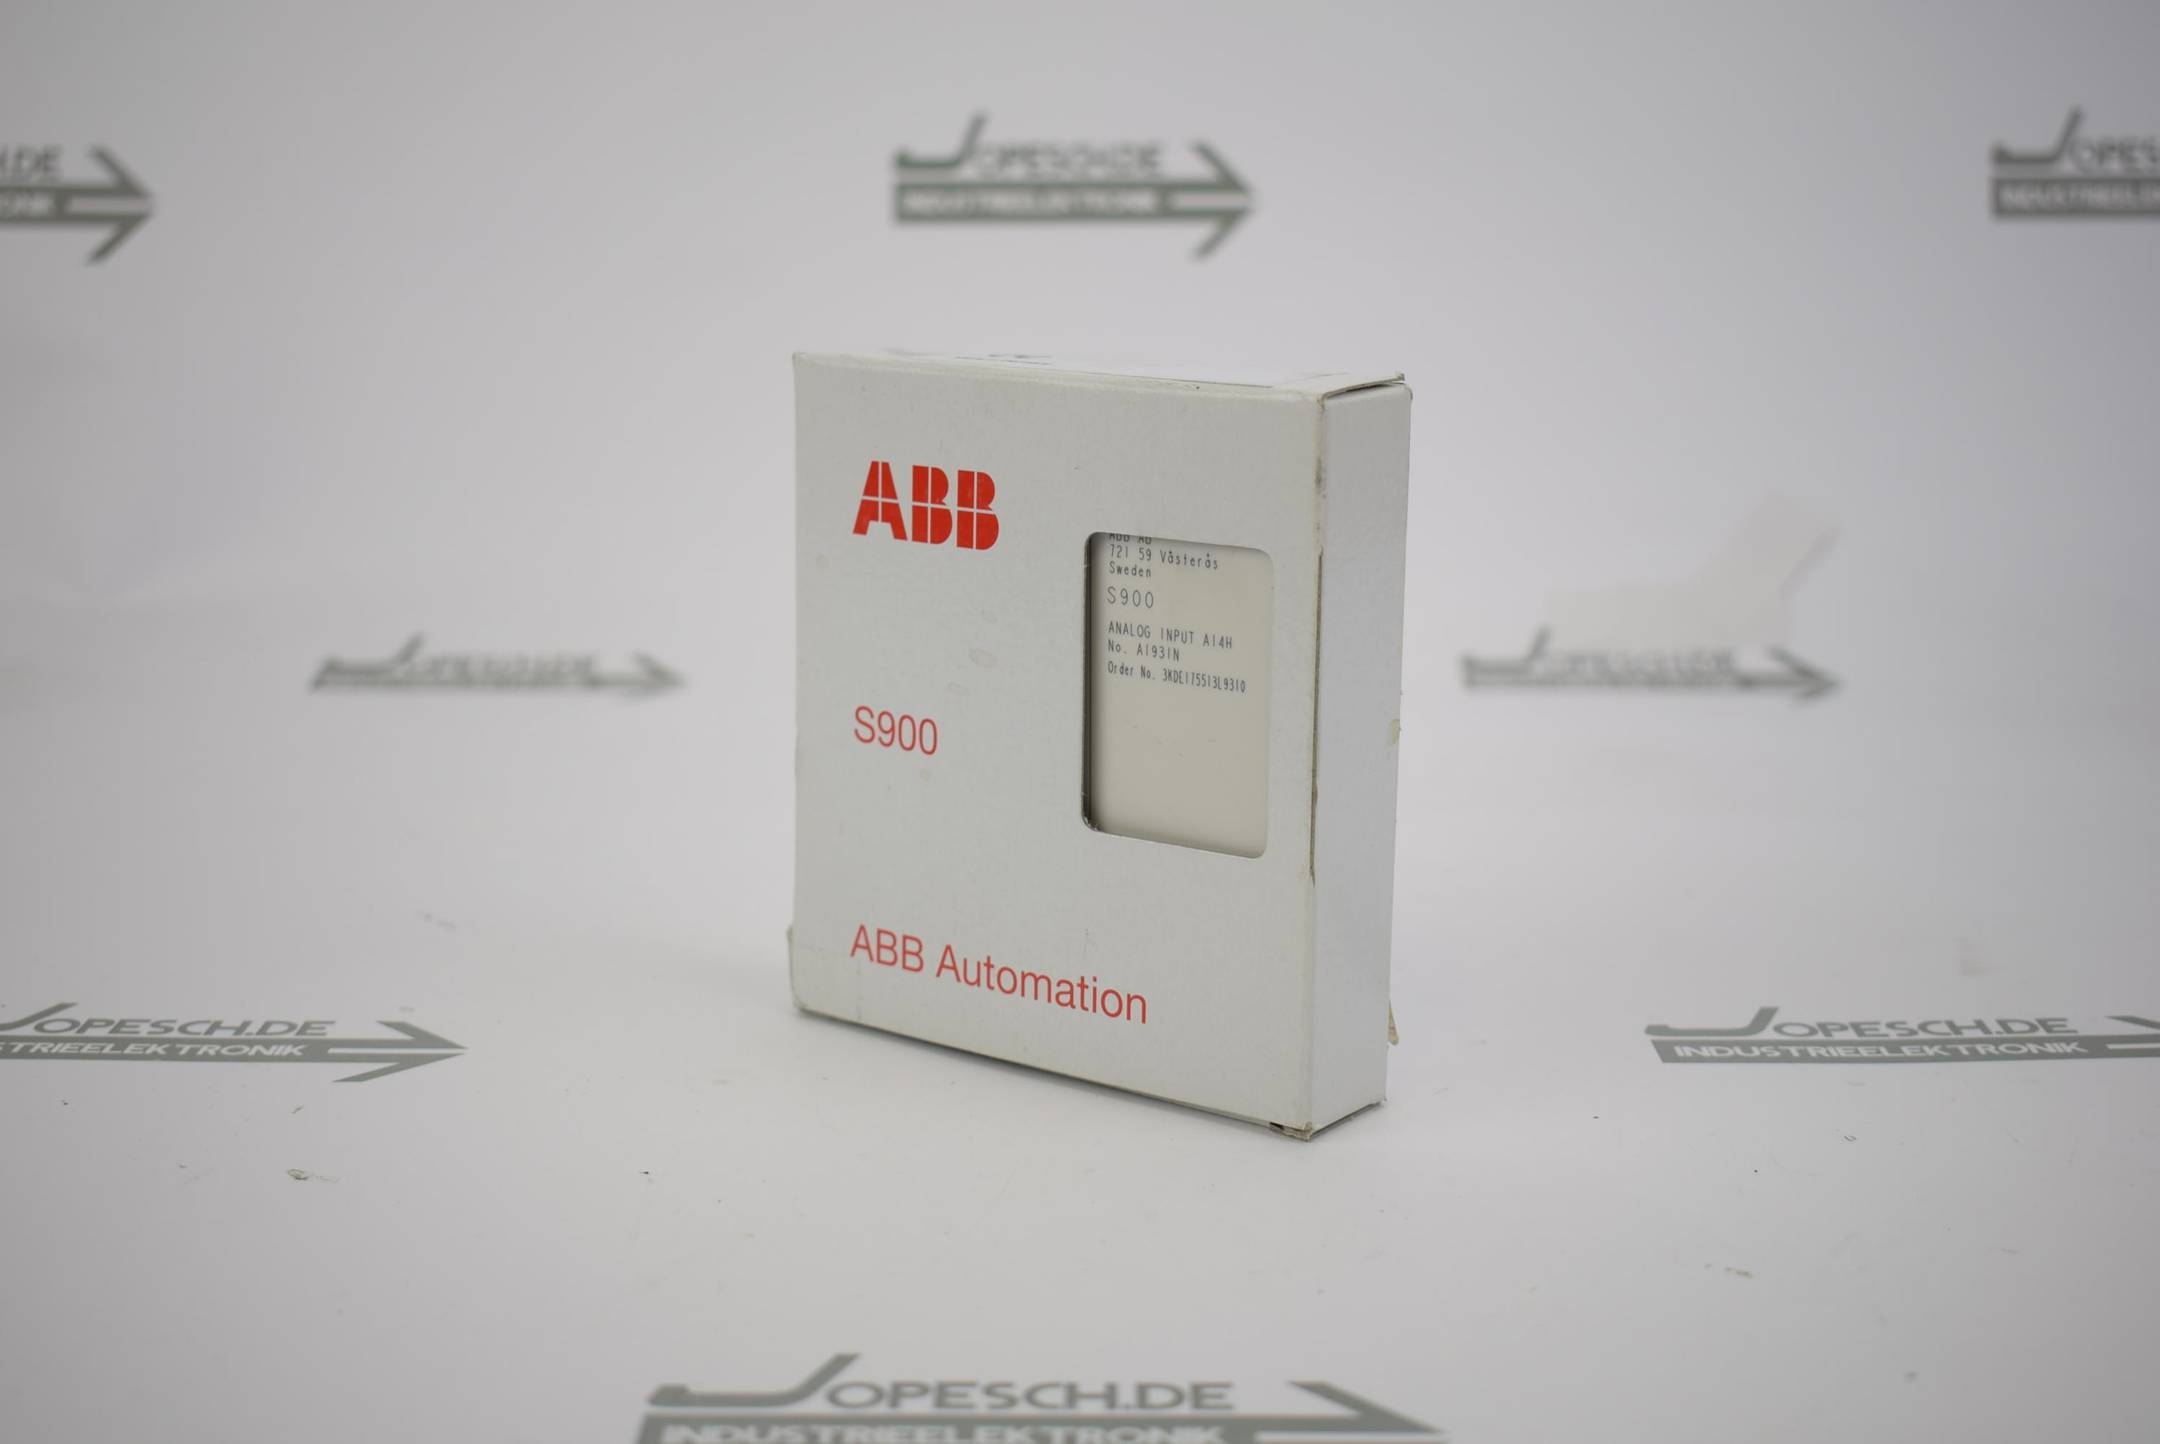 ABB S900 I-O Modul Analog Input, Hart 3KDE175513L9310 ( AI93IN )